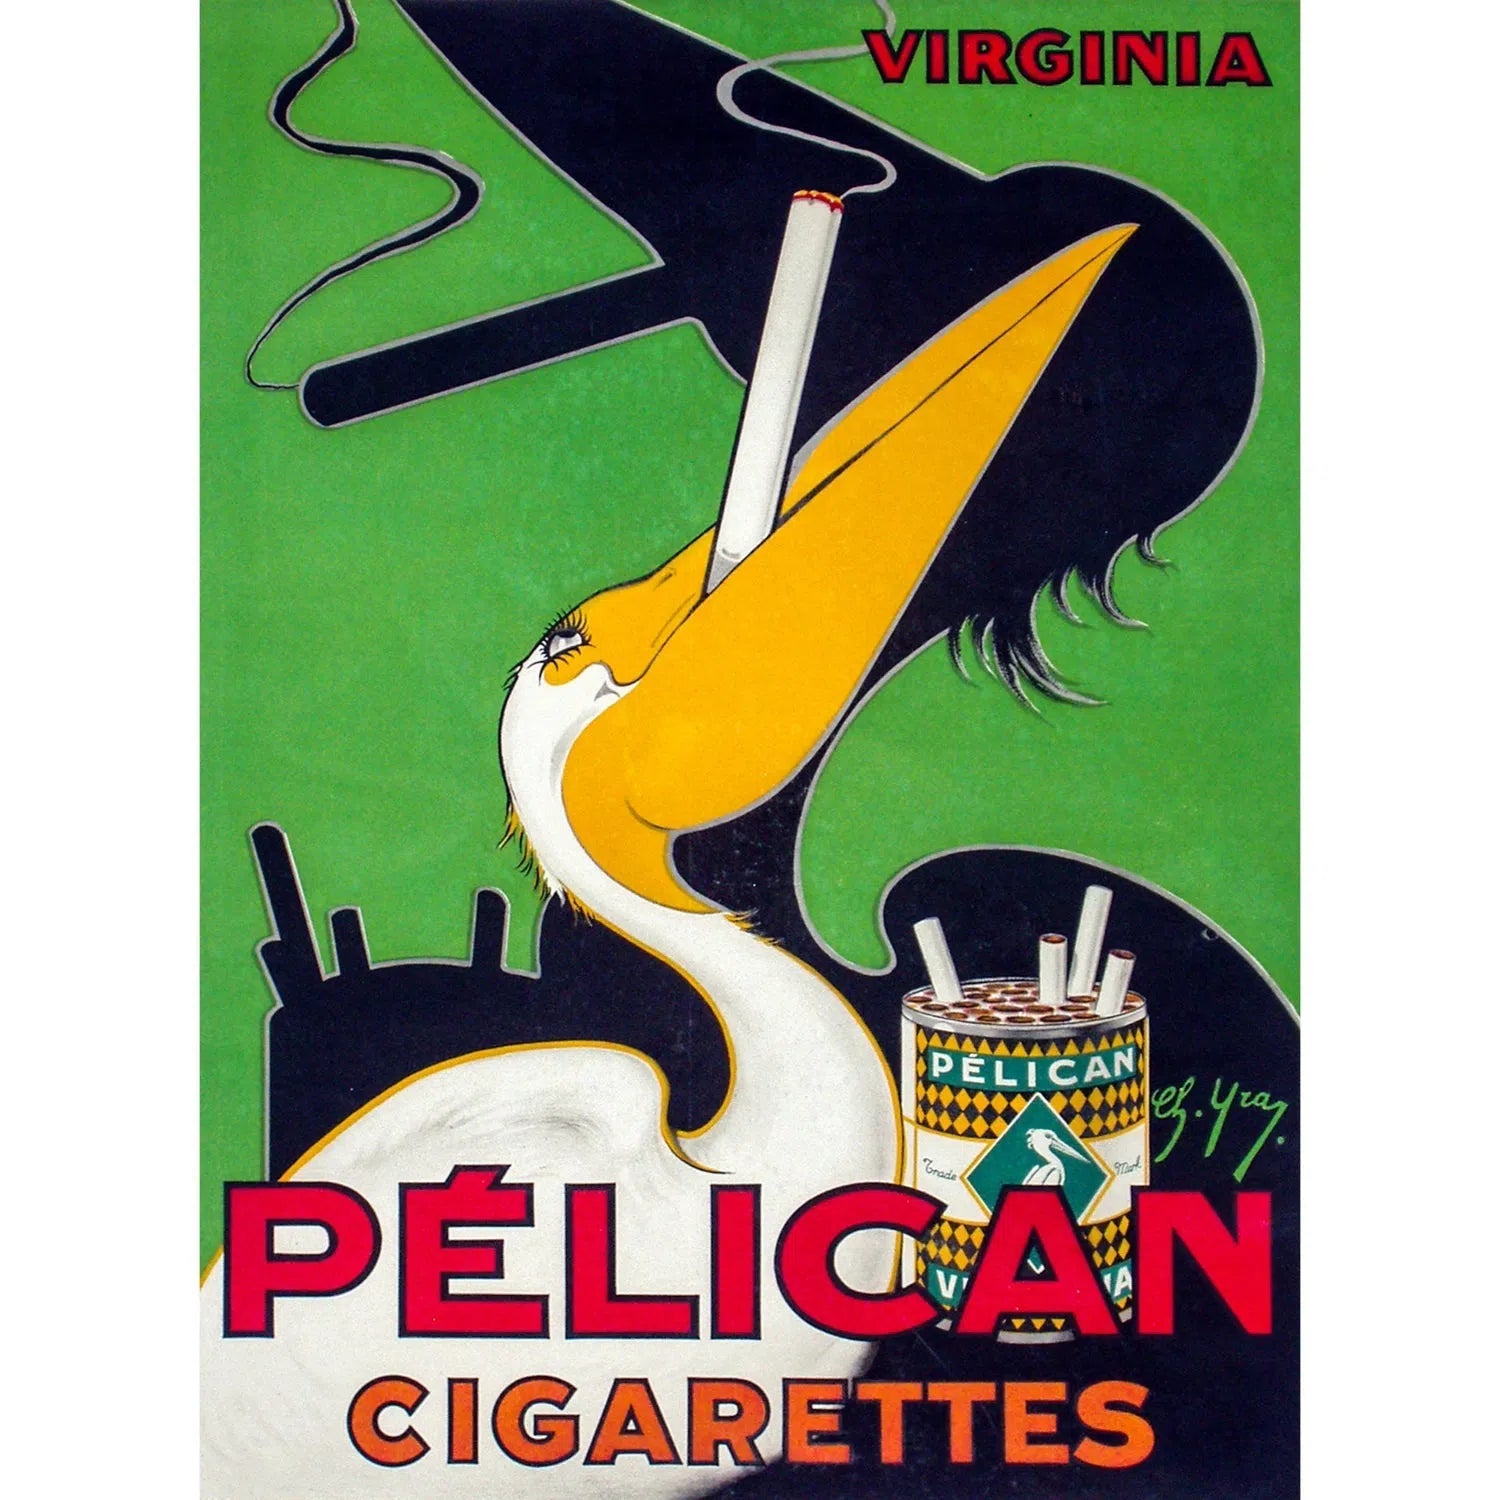 Cigarette Pélican Virginia-Imagesdartistes